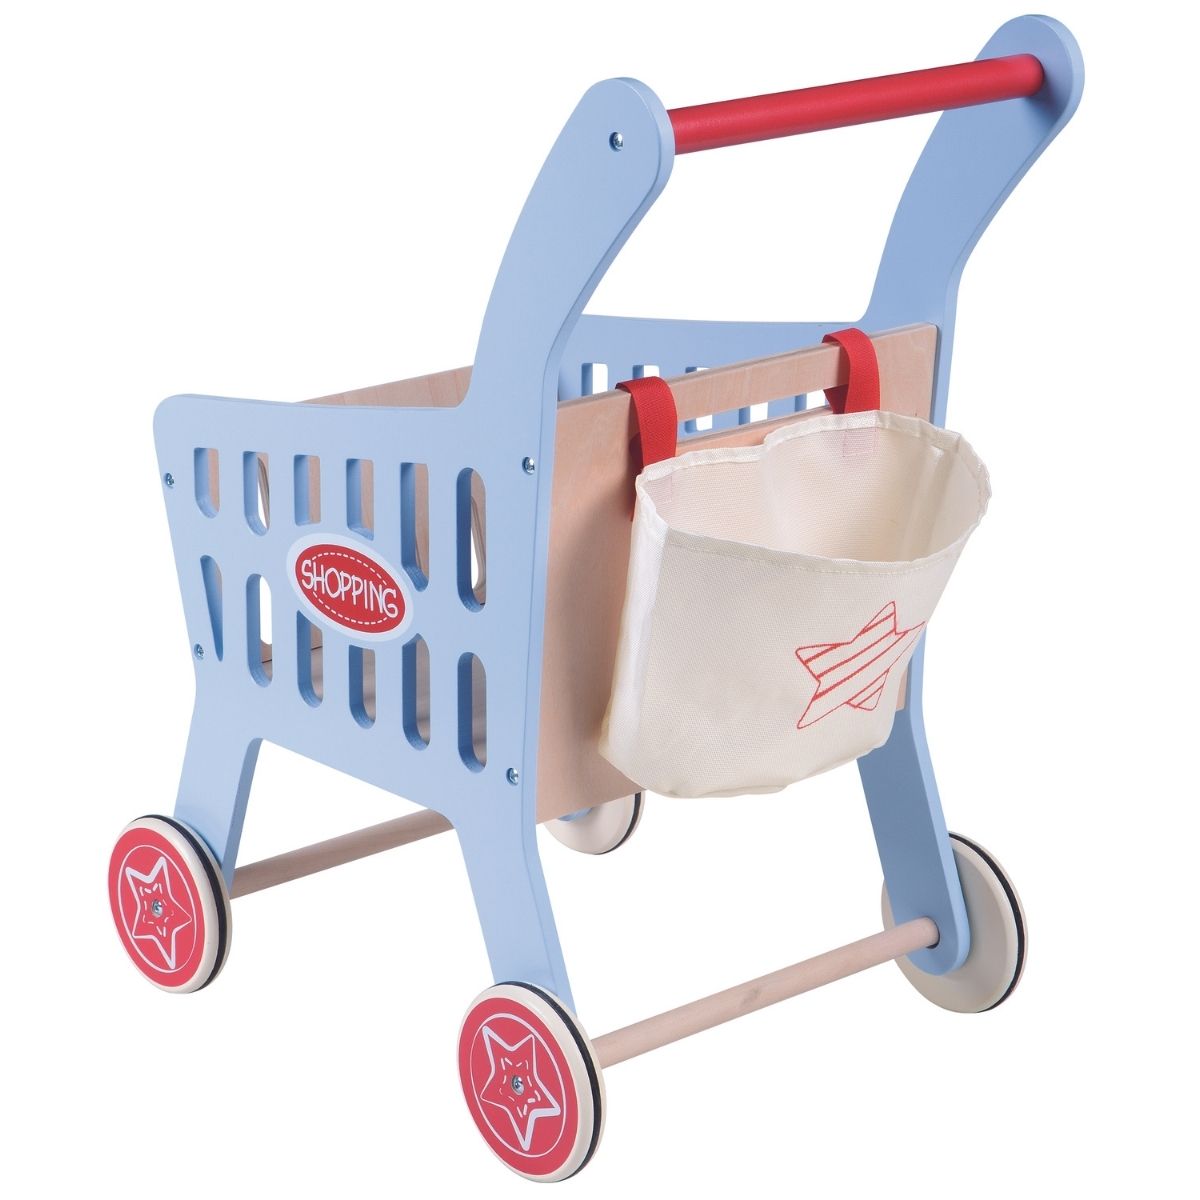 Lelin Shopping Cart